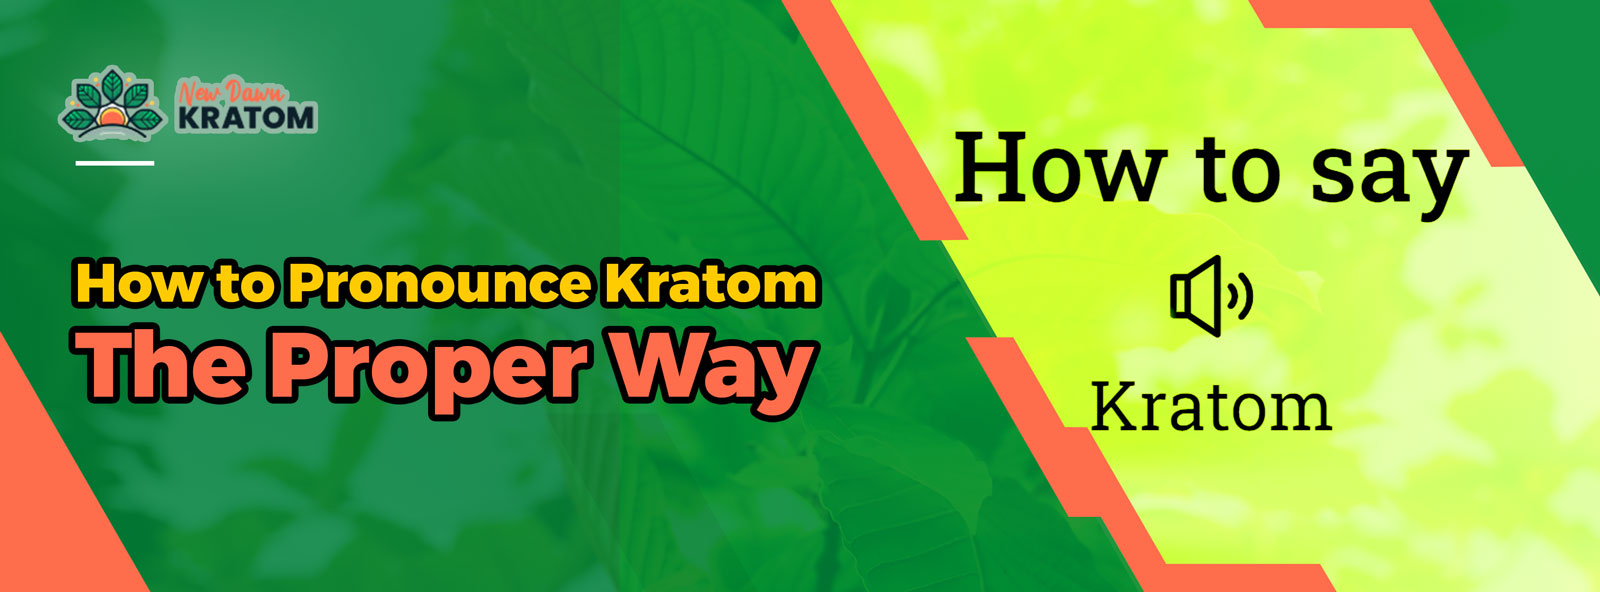 How-to-Pronounce-Kratom-The-Proper-Way